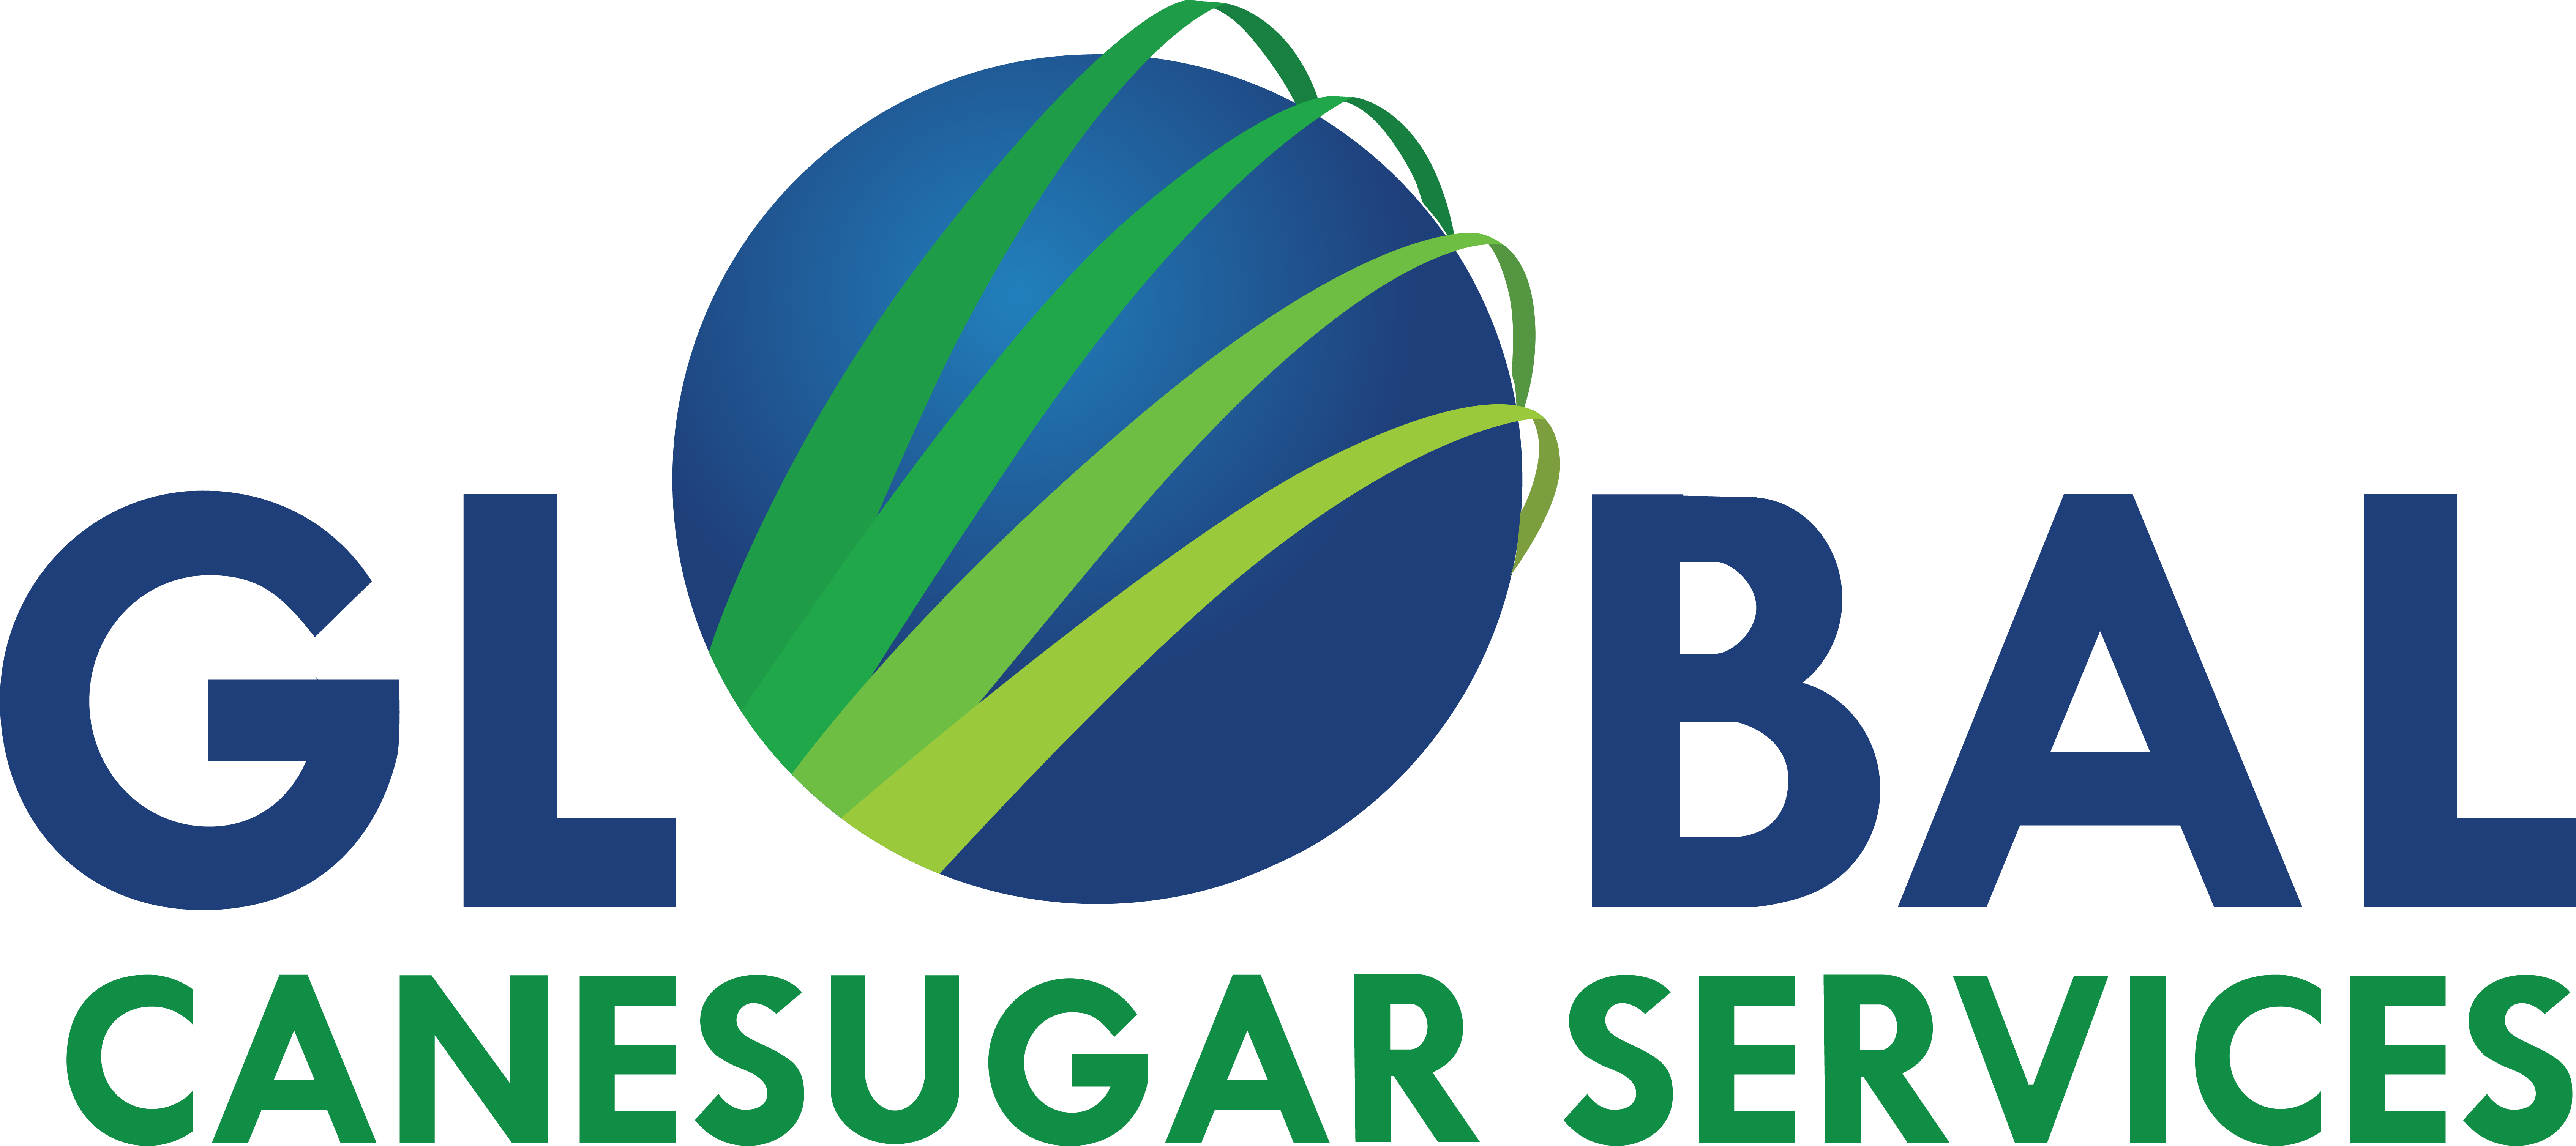 Global-Sugarcane-Company